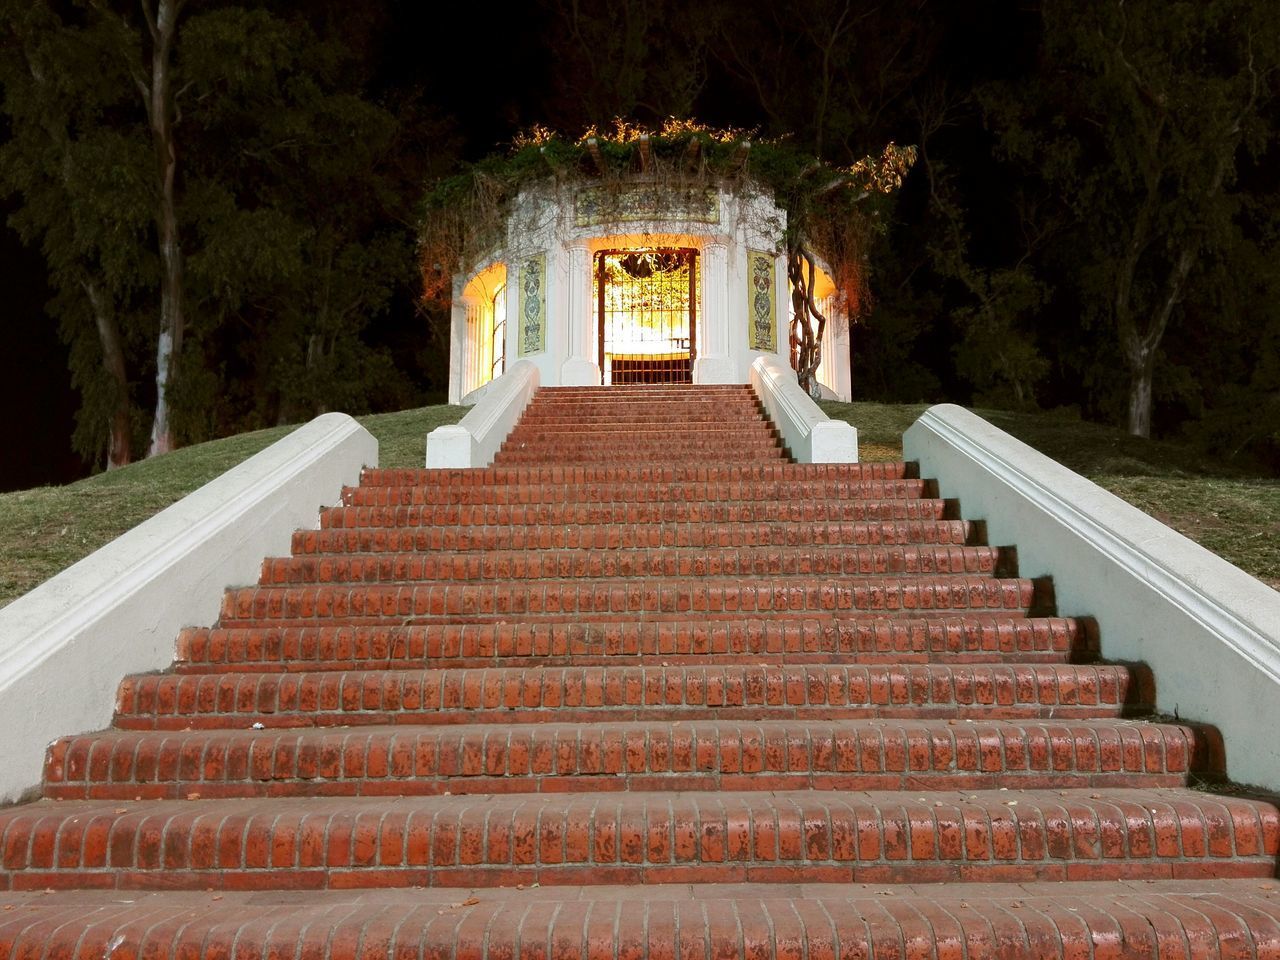 STEPS LEADING TOWARDS ILLUMINATED STAIRCASE